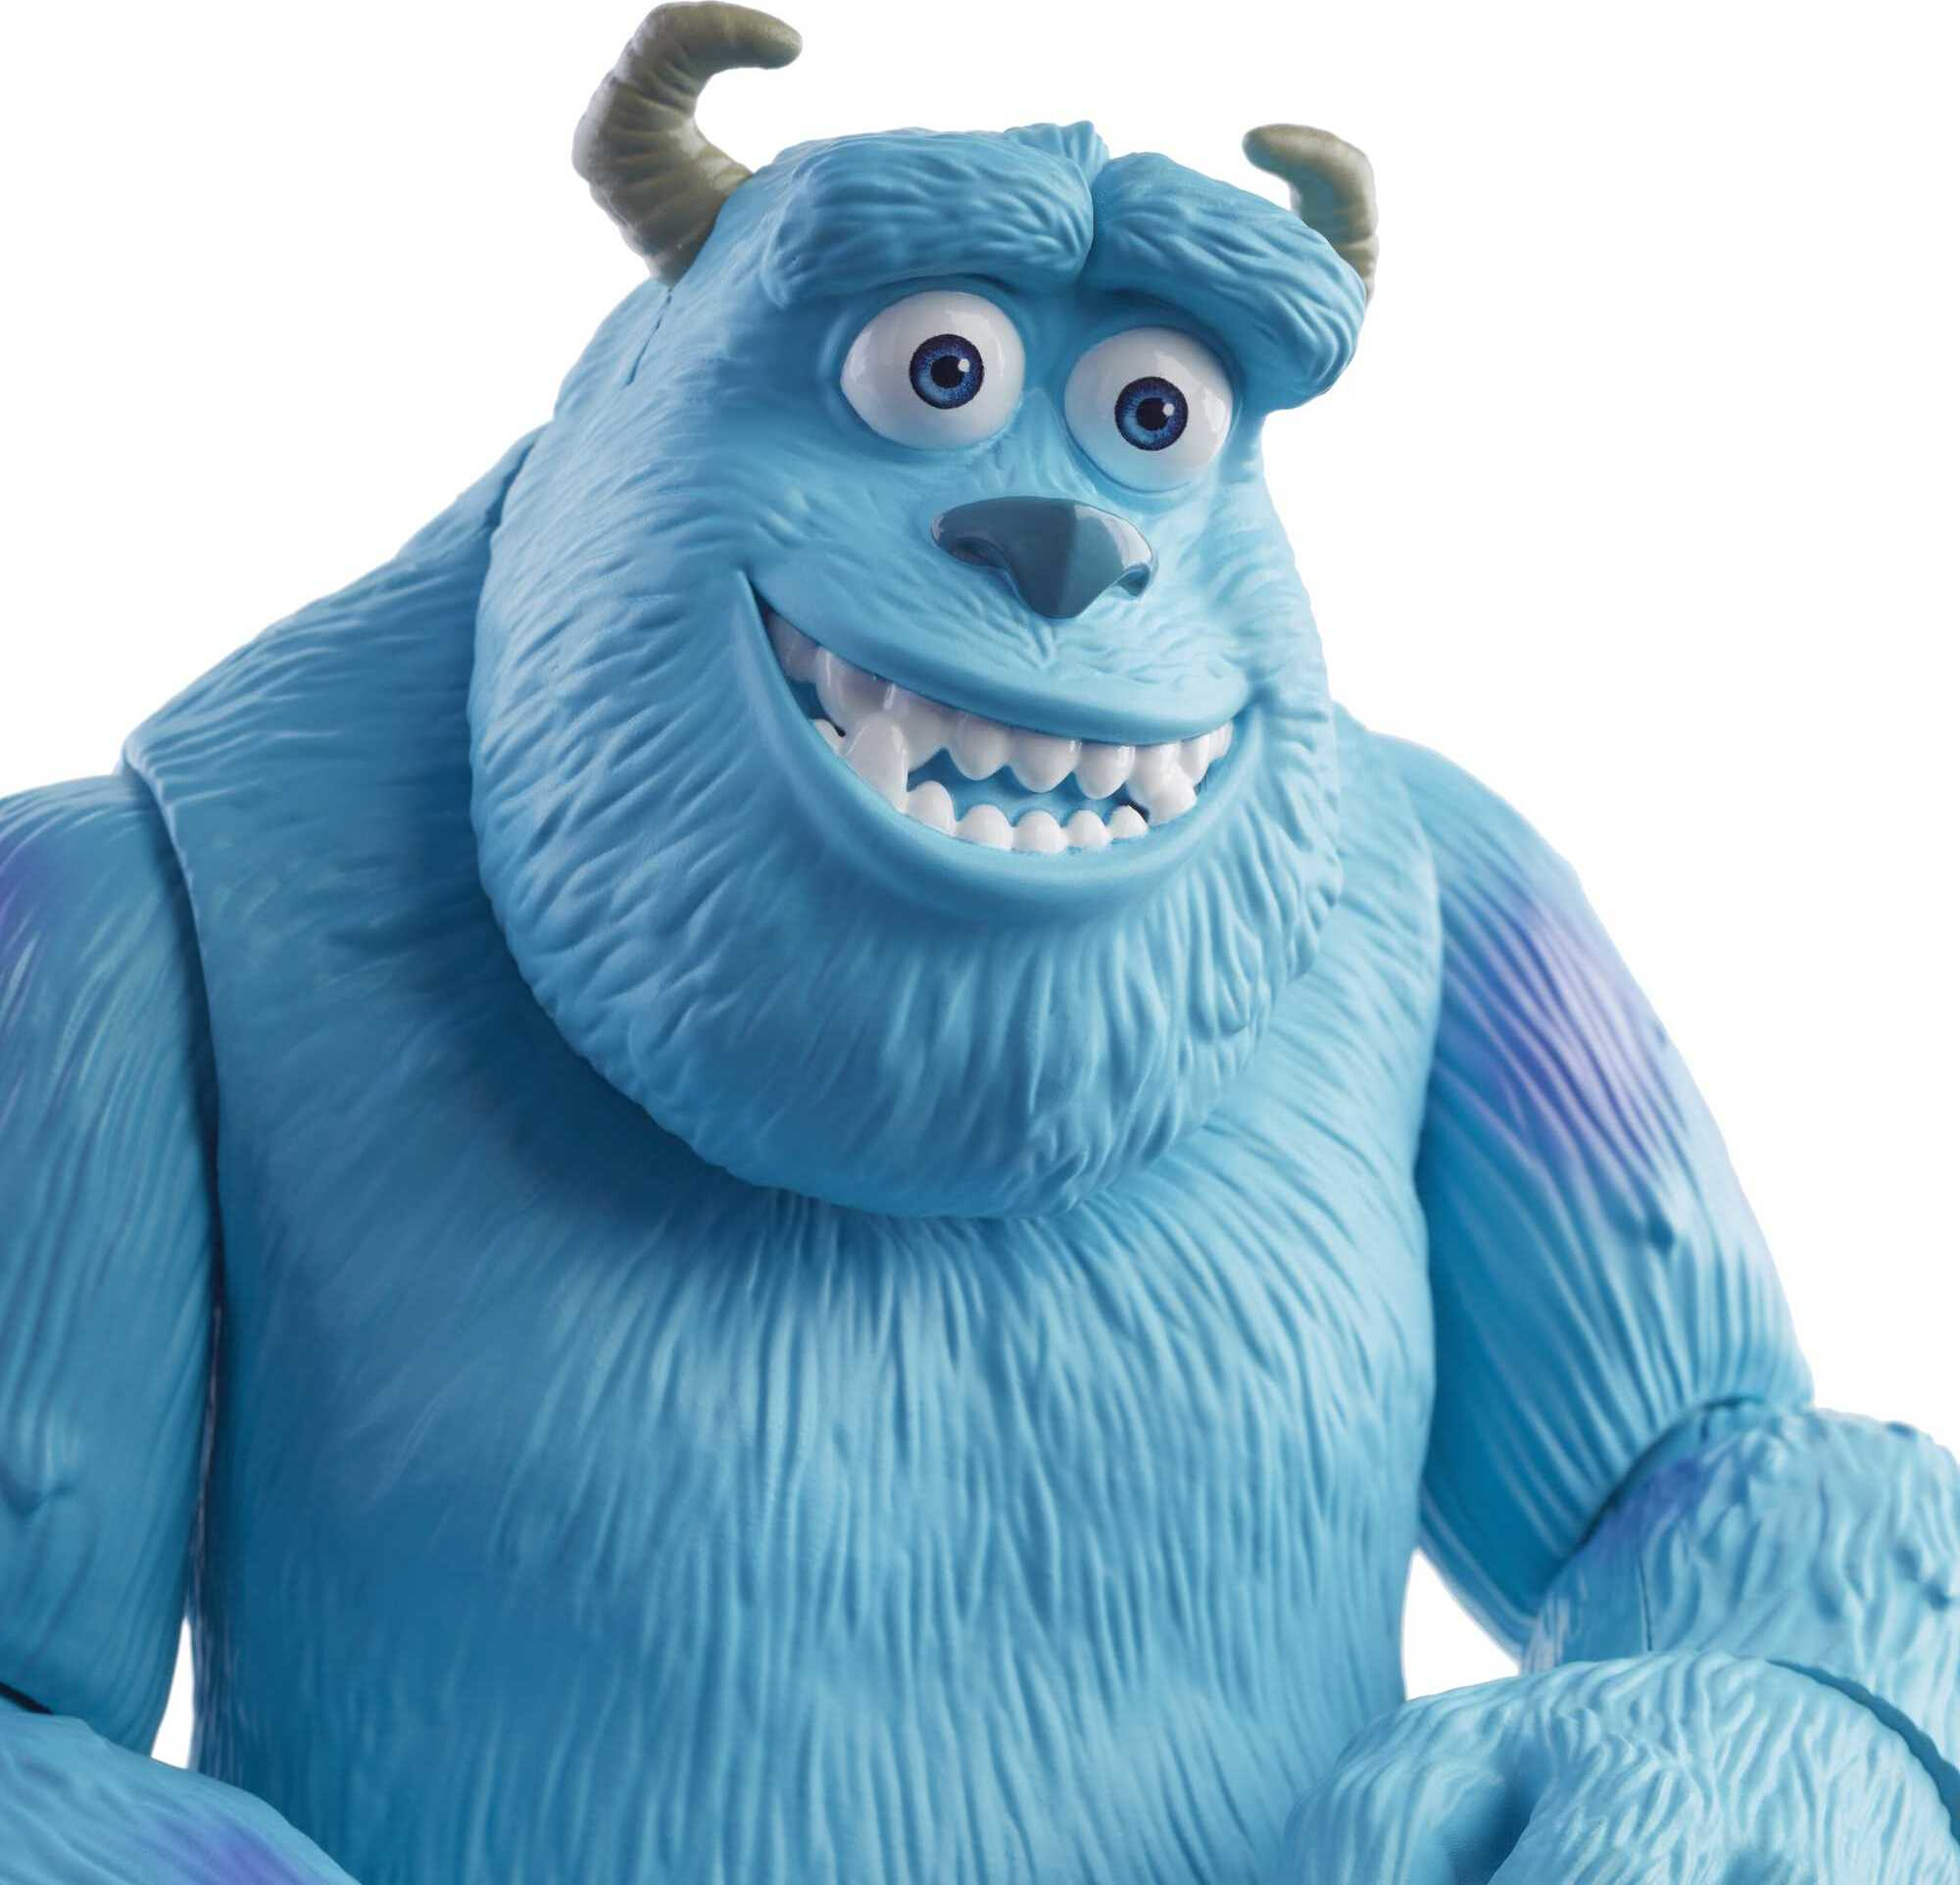 Disney Pixar Monsters Inc Action Figure Sulley James P Sullivan Character - image 5 of 7